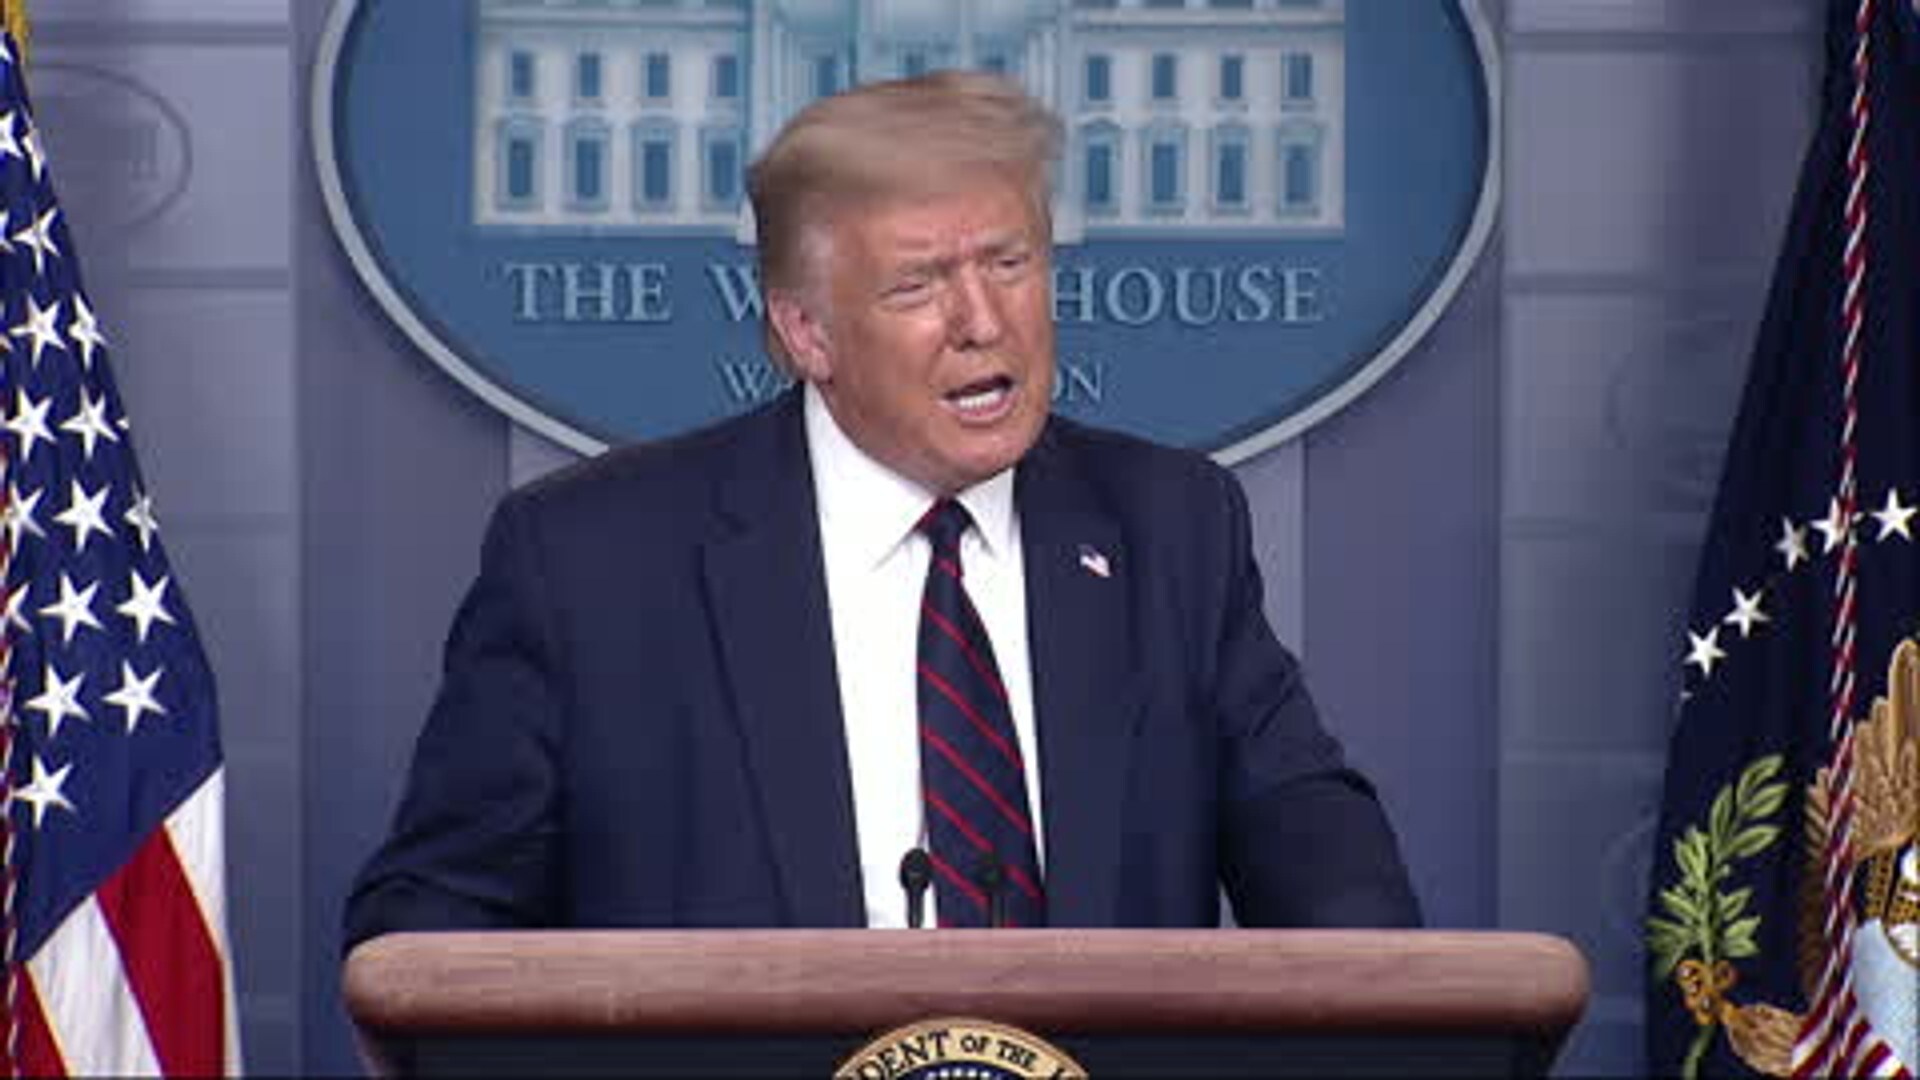 President Trumps pressekonferanse